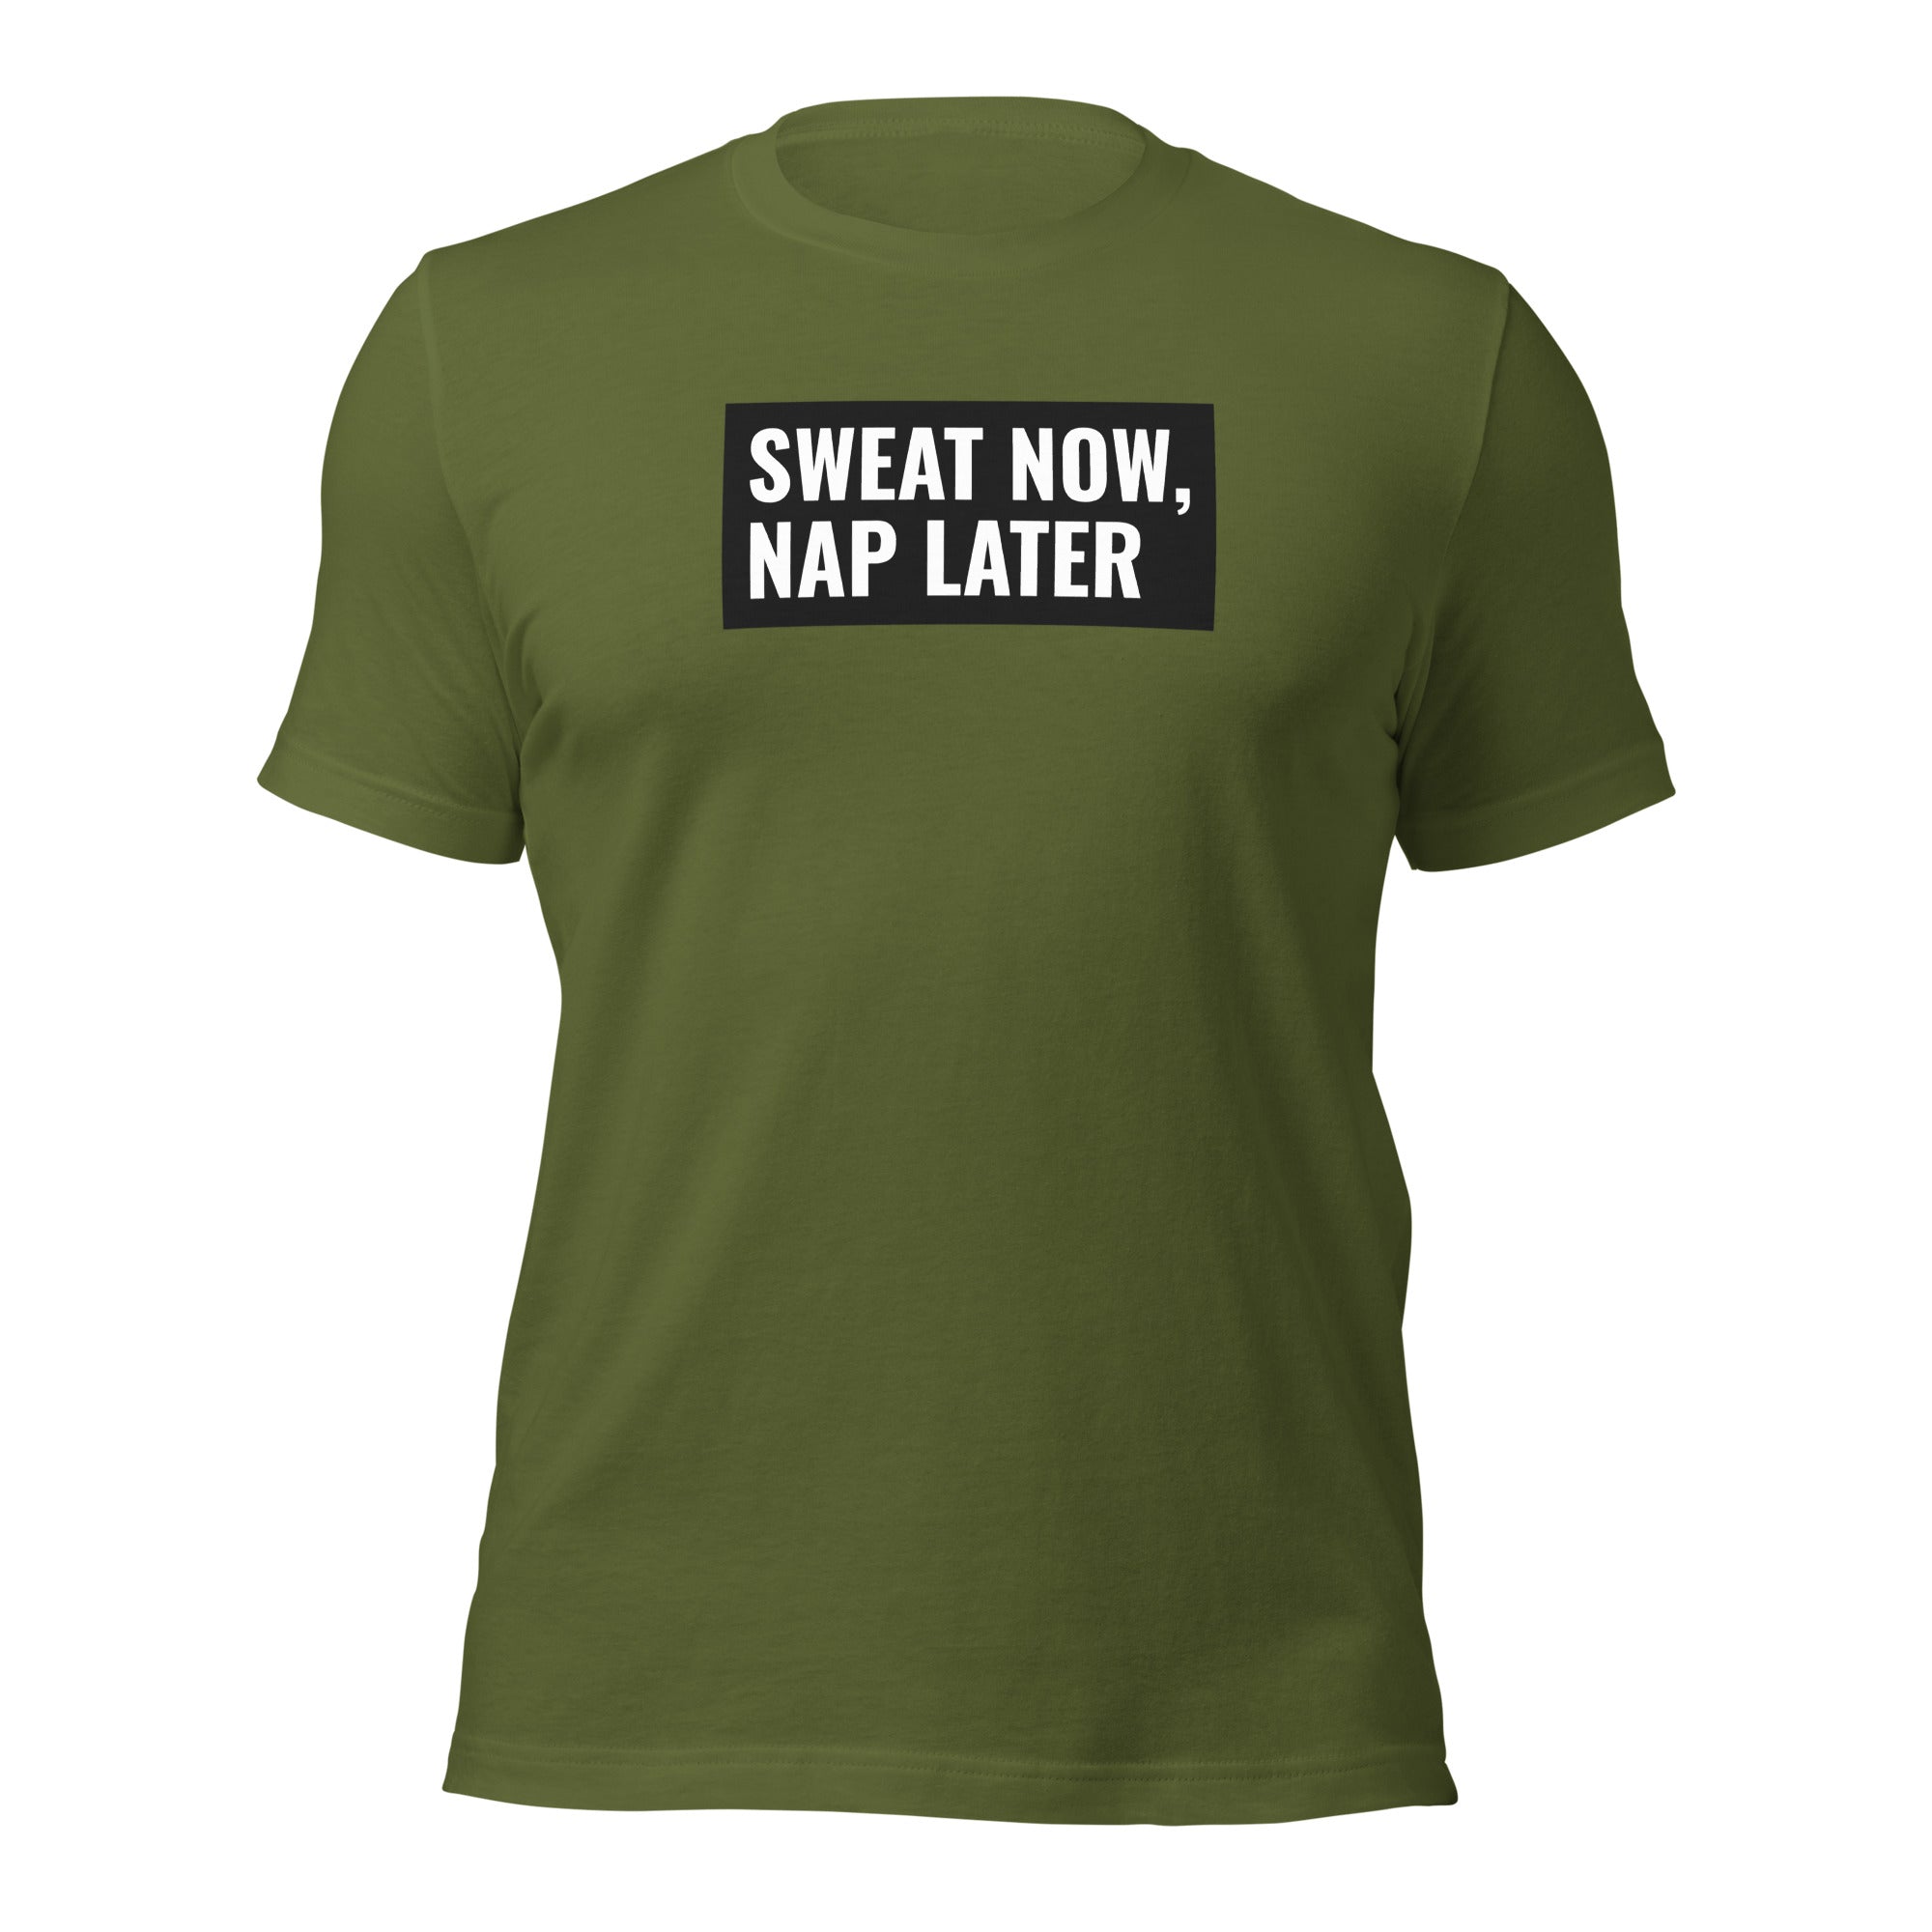 Sweat Now, Nap Later Unisex T-shirt